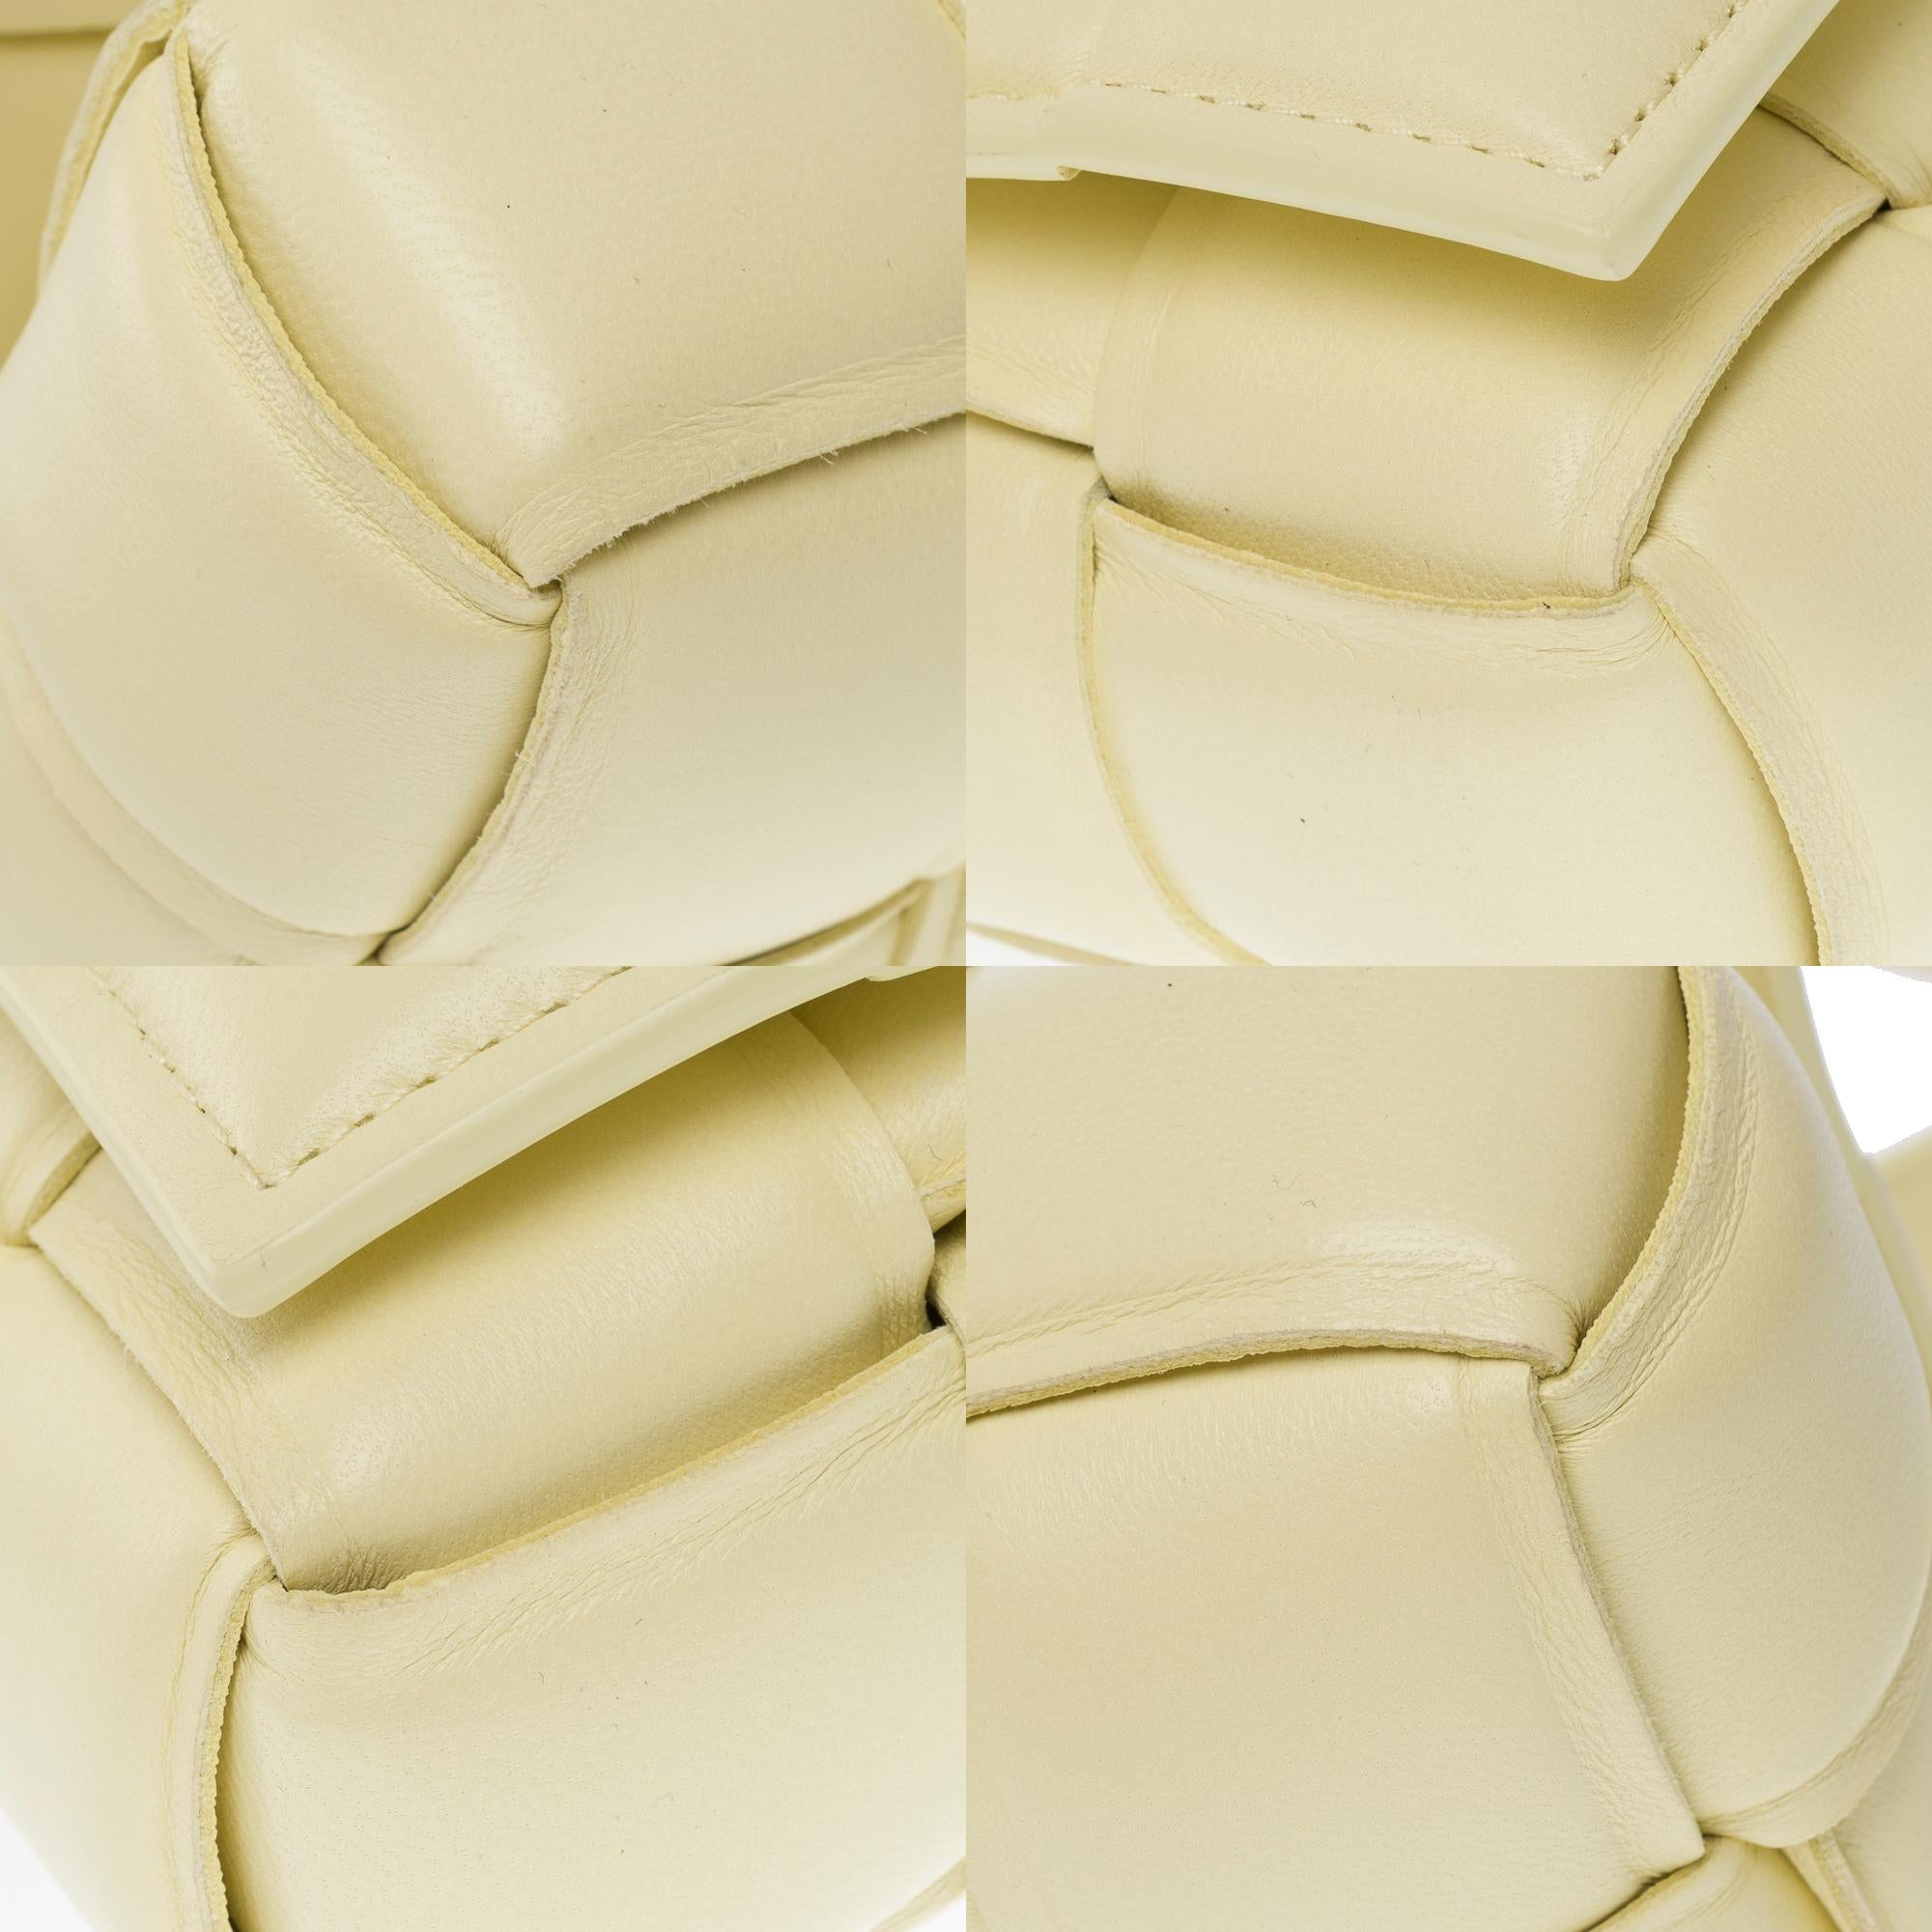 Bottega Veneta Cassette 19 shoulder bag in beige lambskin leather, GHW For Sale 7